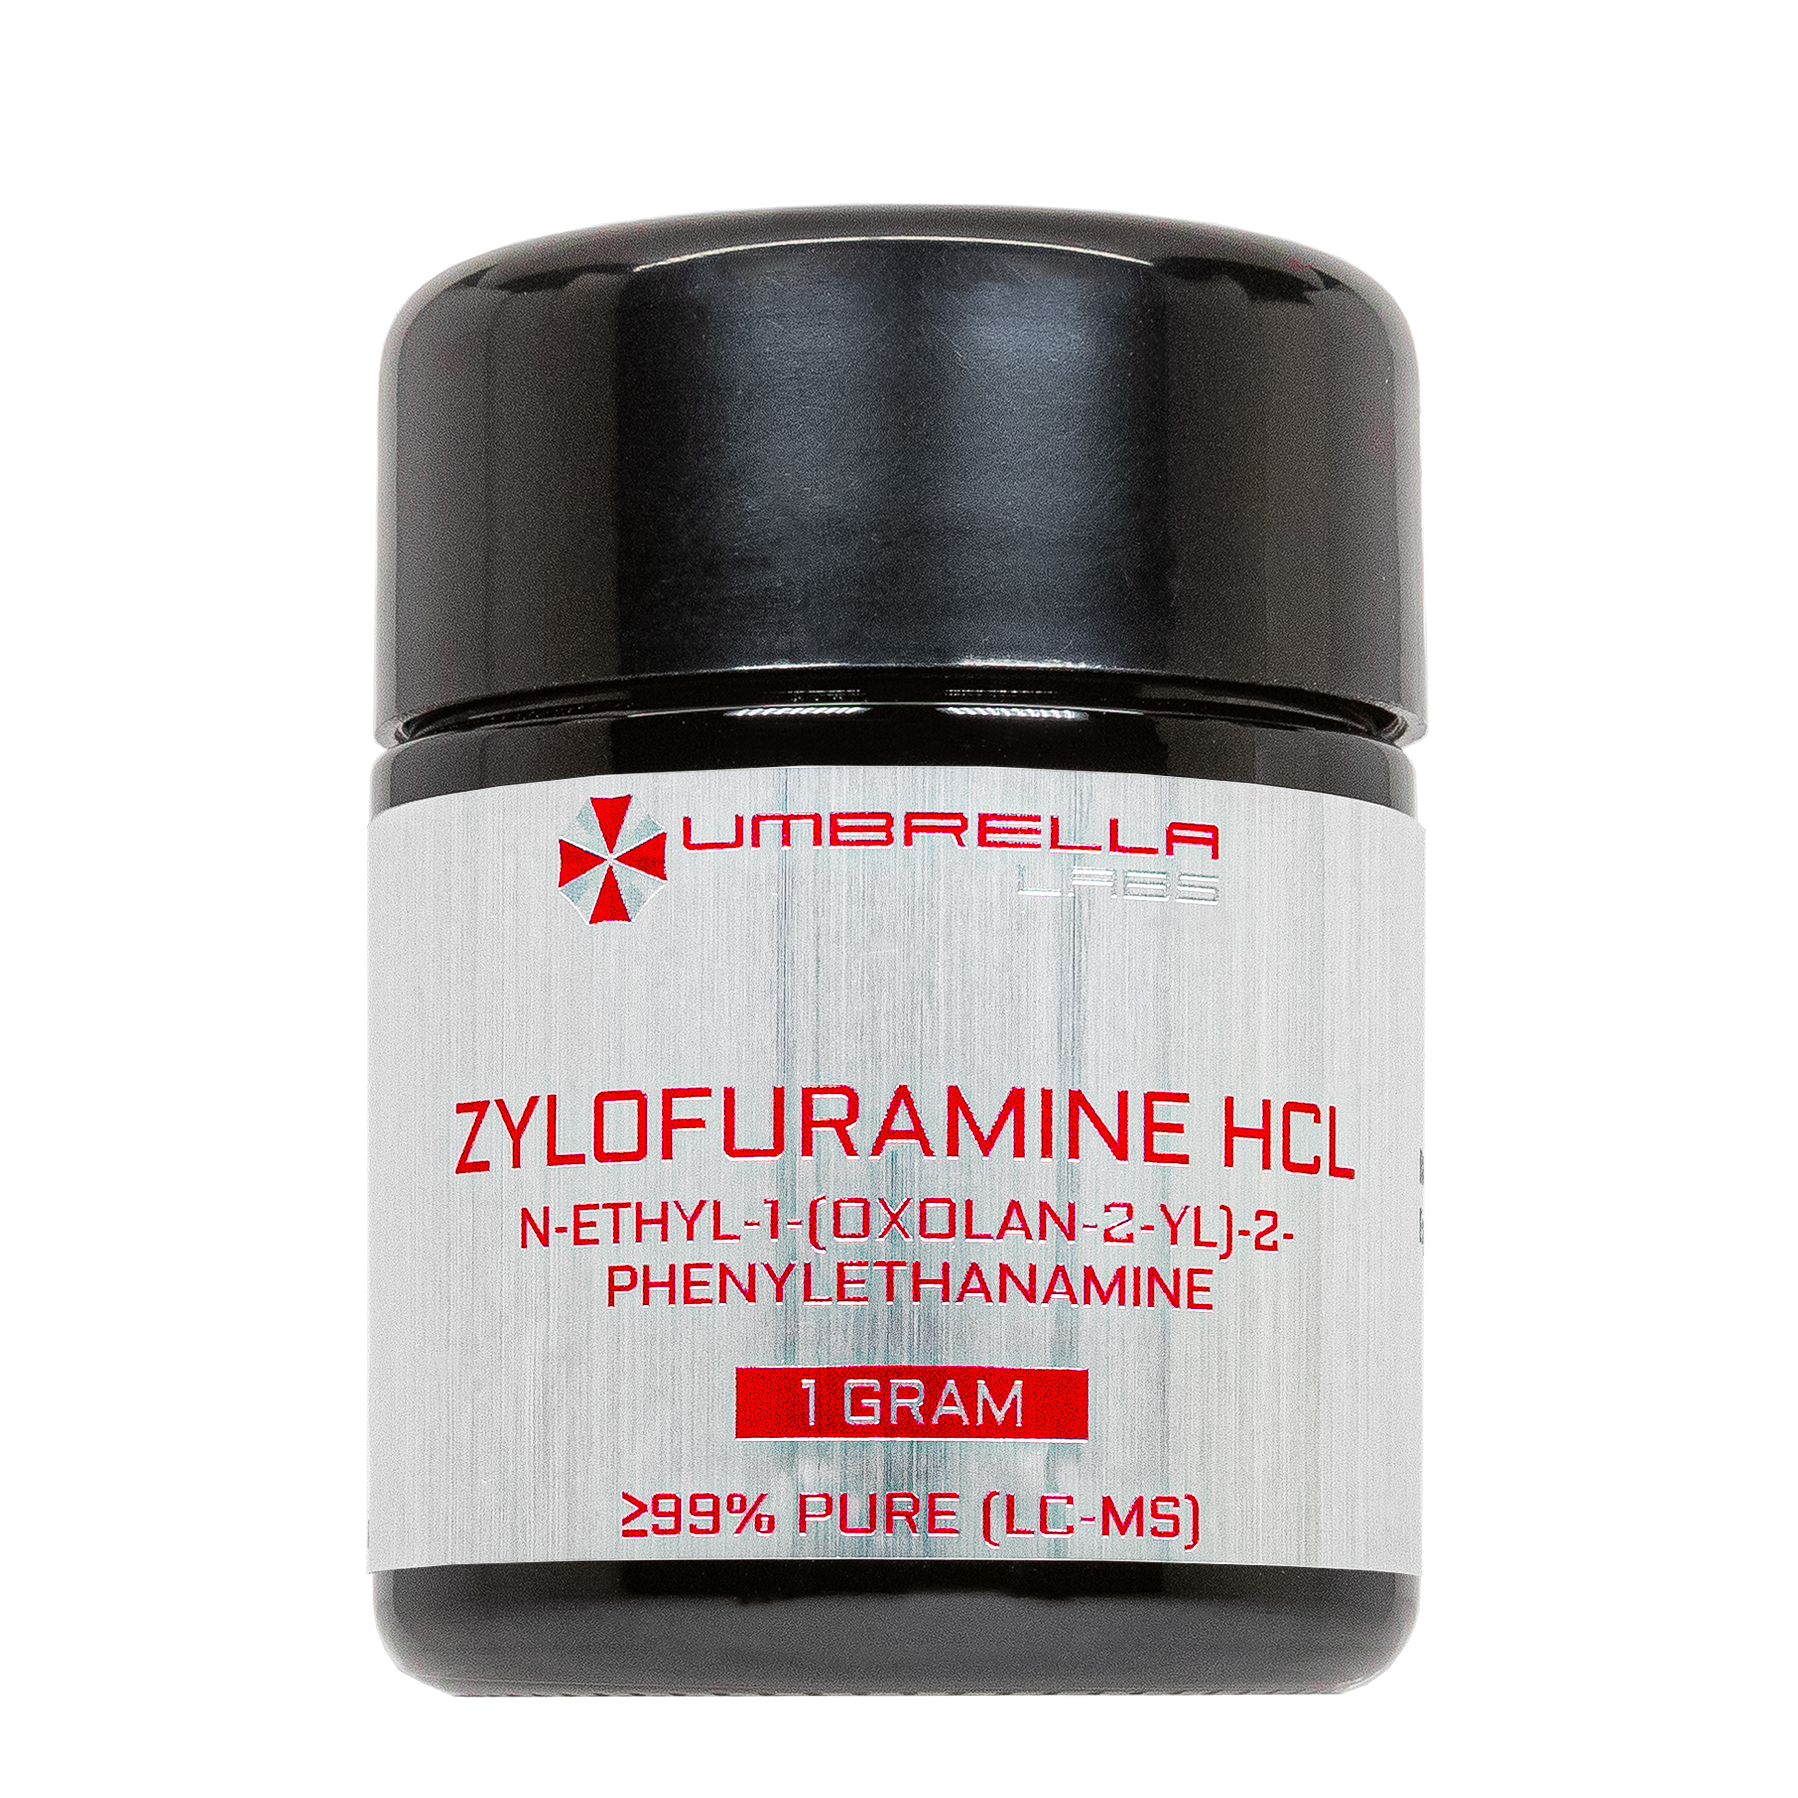 zylofuramine hcl powder (1 gram)